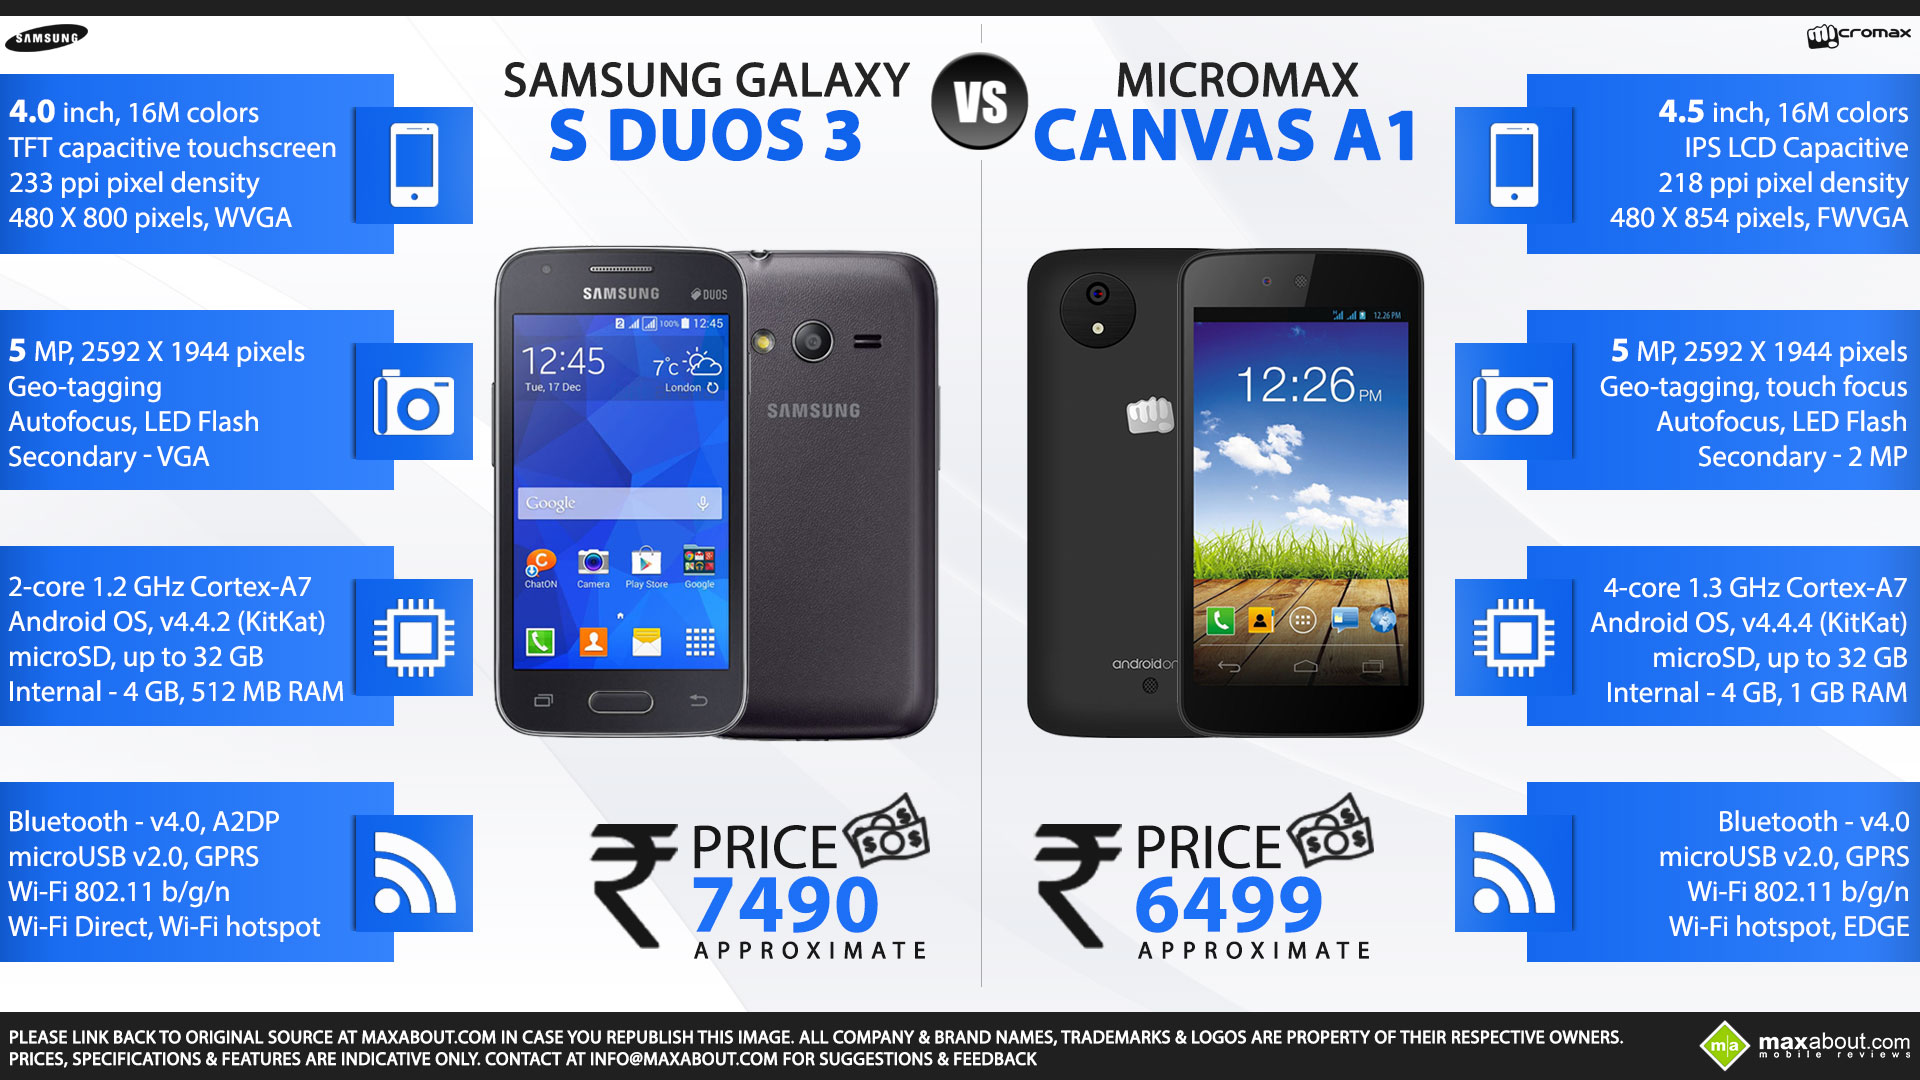 Samsung Galaxy S Duos 3 Vs Micromax Canvas A1